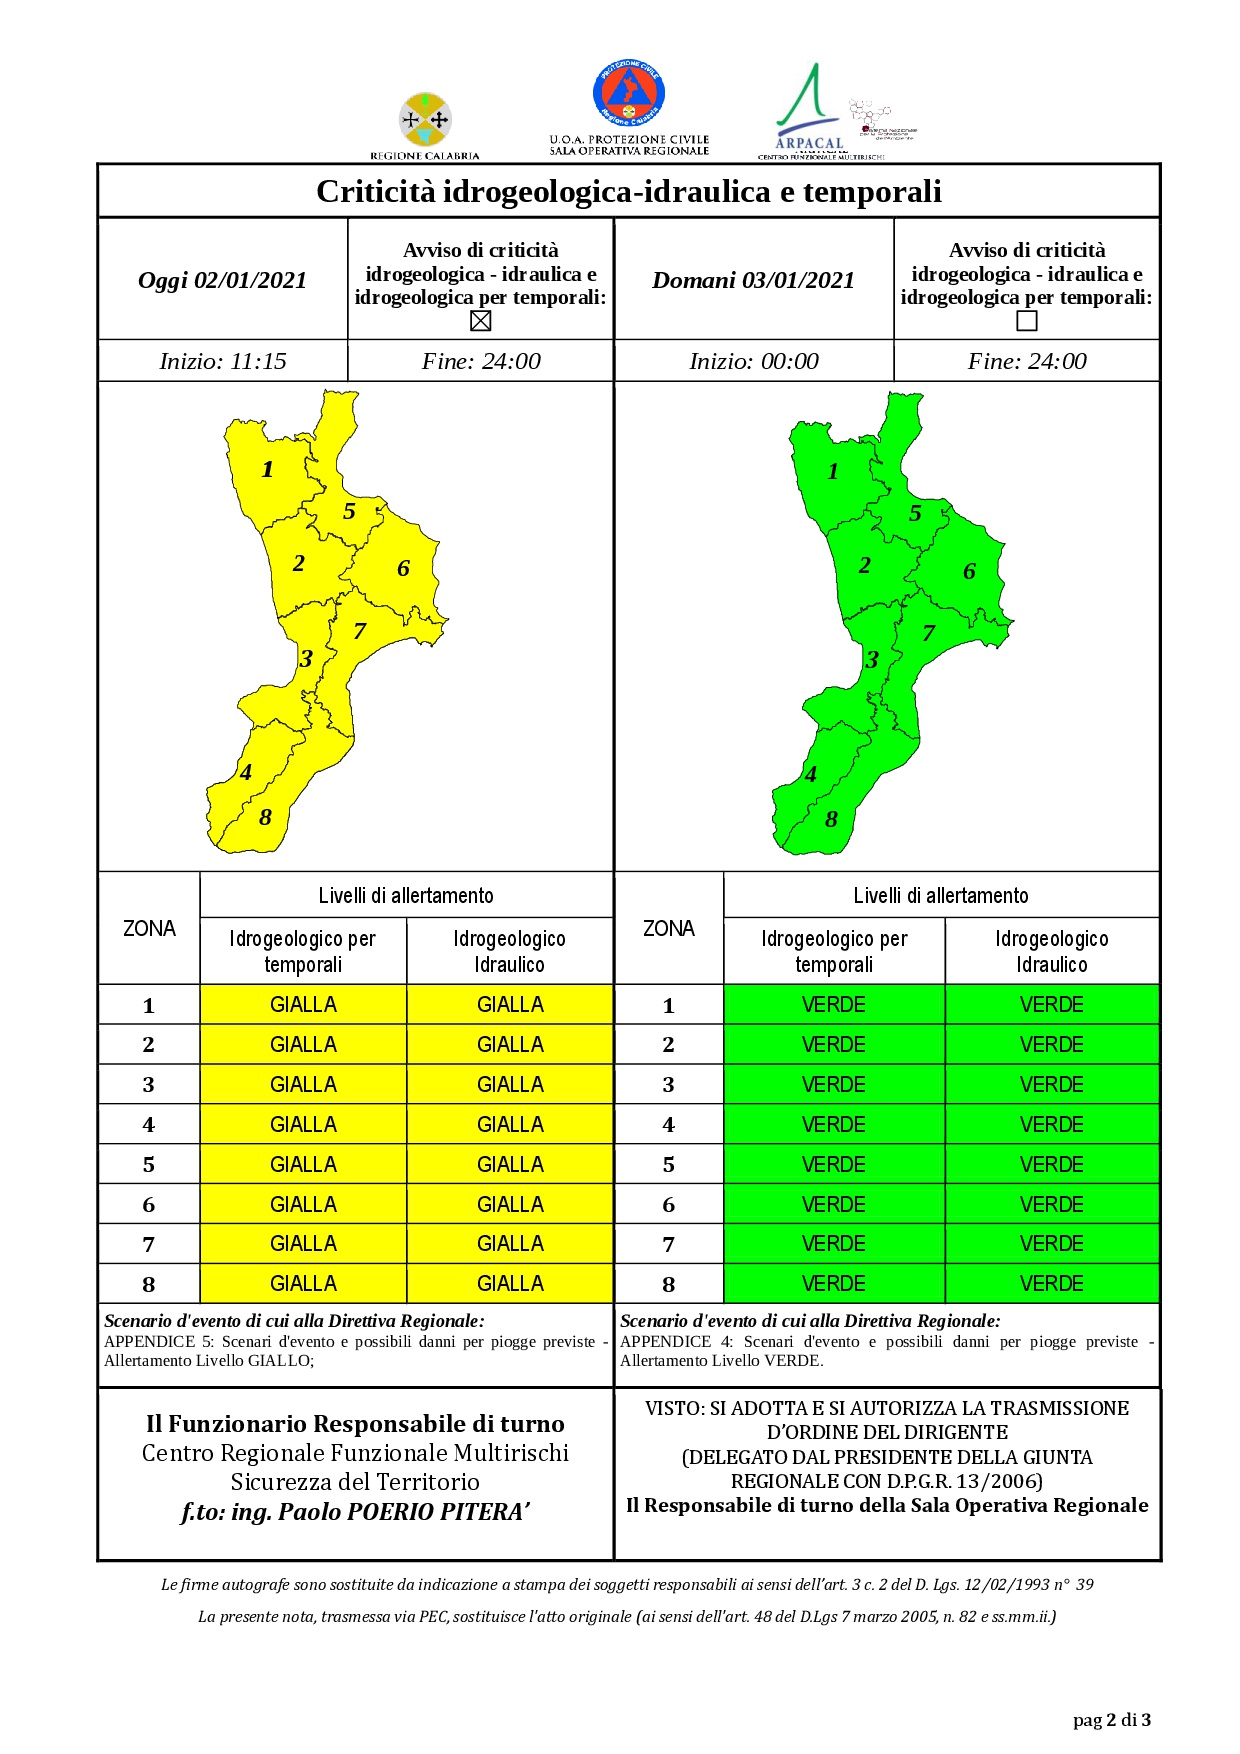 Criticità idrogeologica-idraulica e temporali in Calabria 02-01-2021